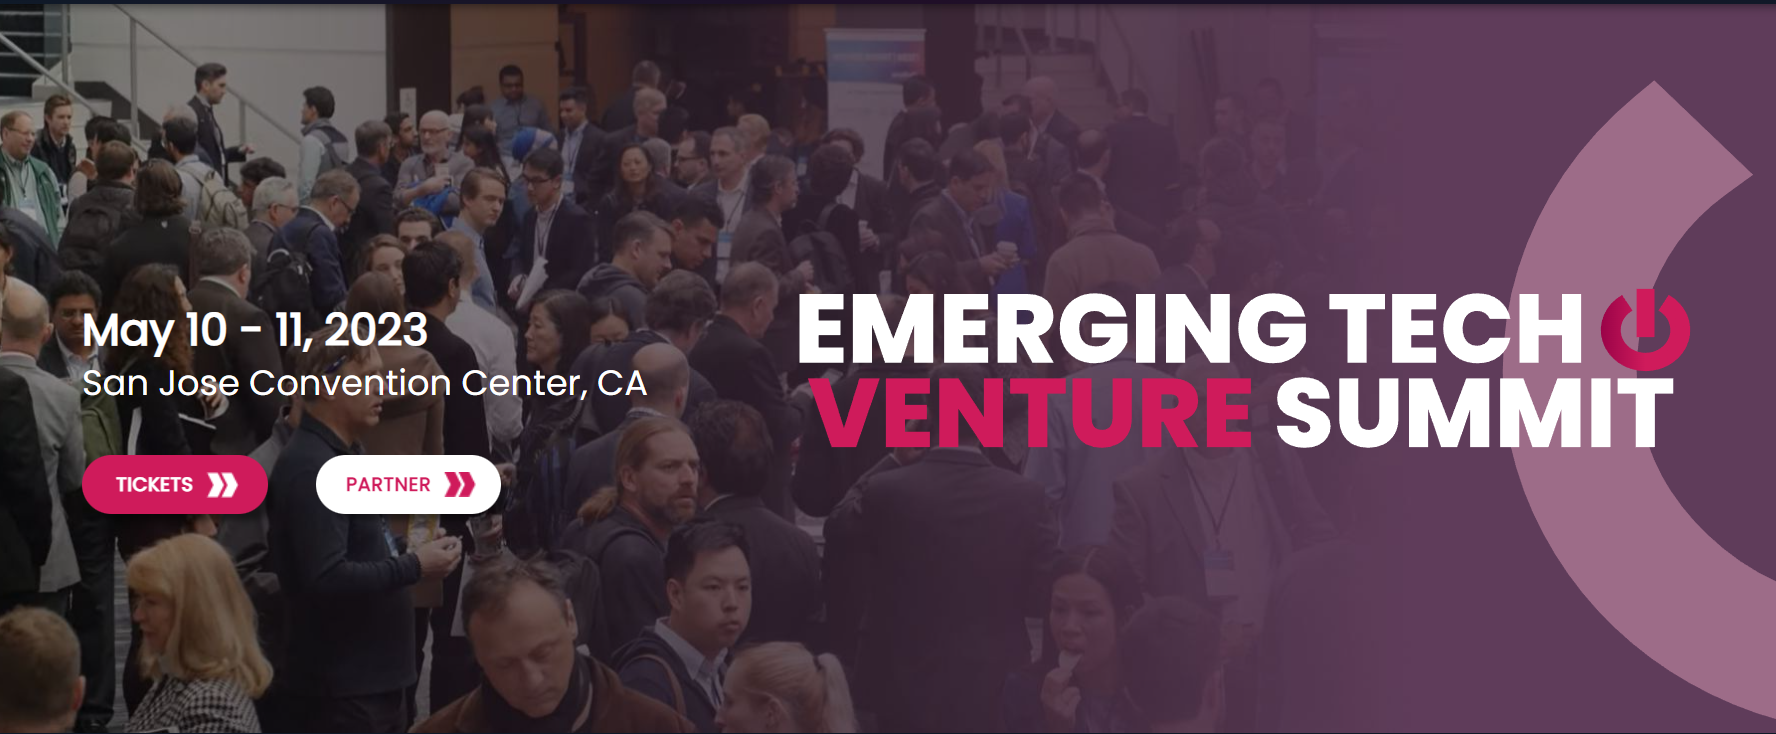 Emerging Tech Venture Summit